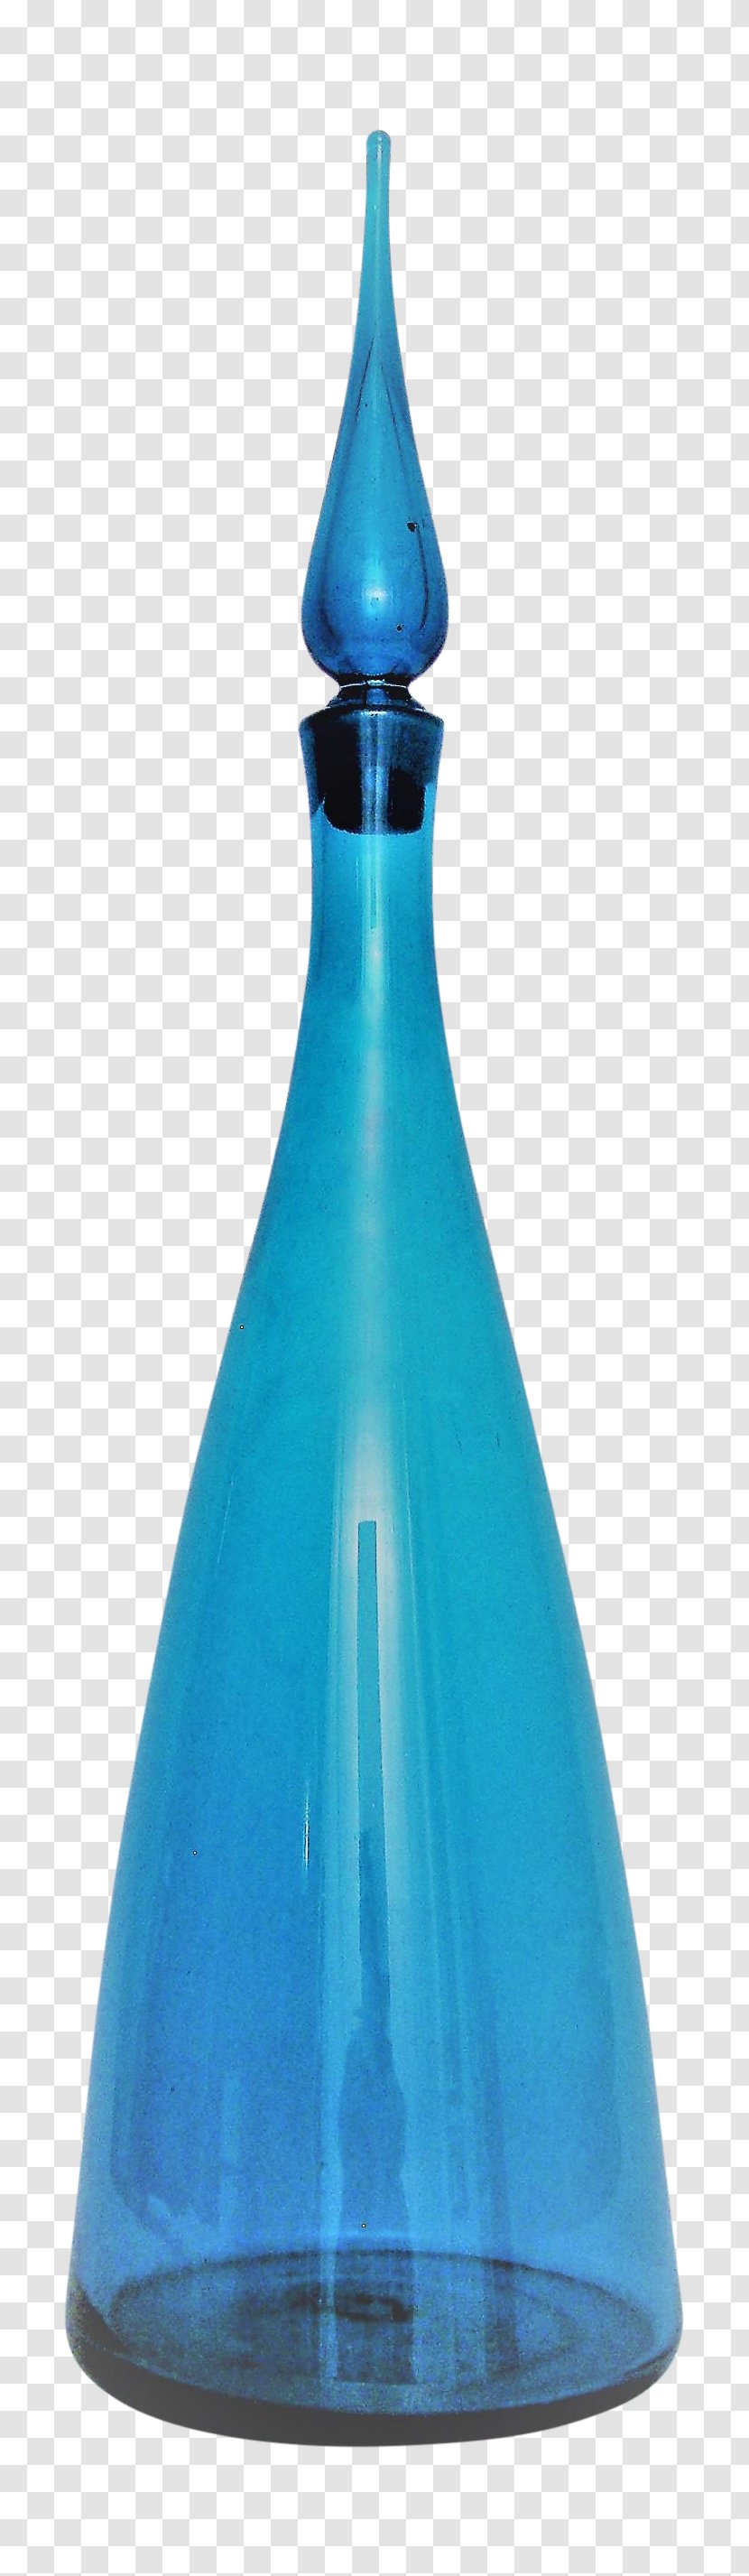 Blenko Glass Company, Inc. Bottle Decanter Cobalt Blue - Pitcher - Stopper Transparent PNG